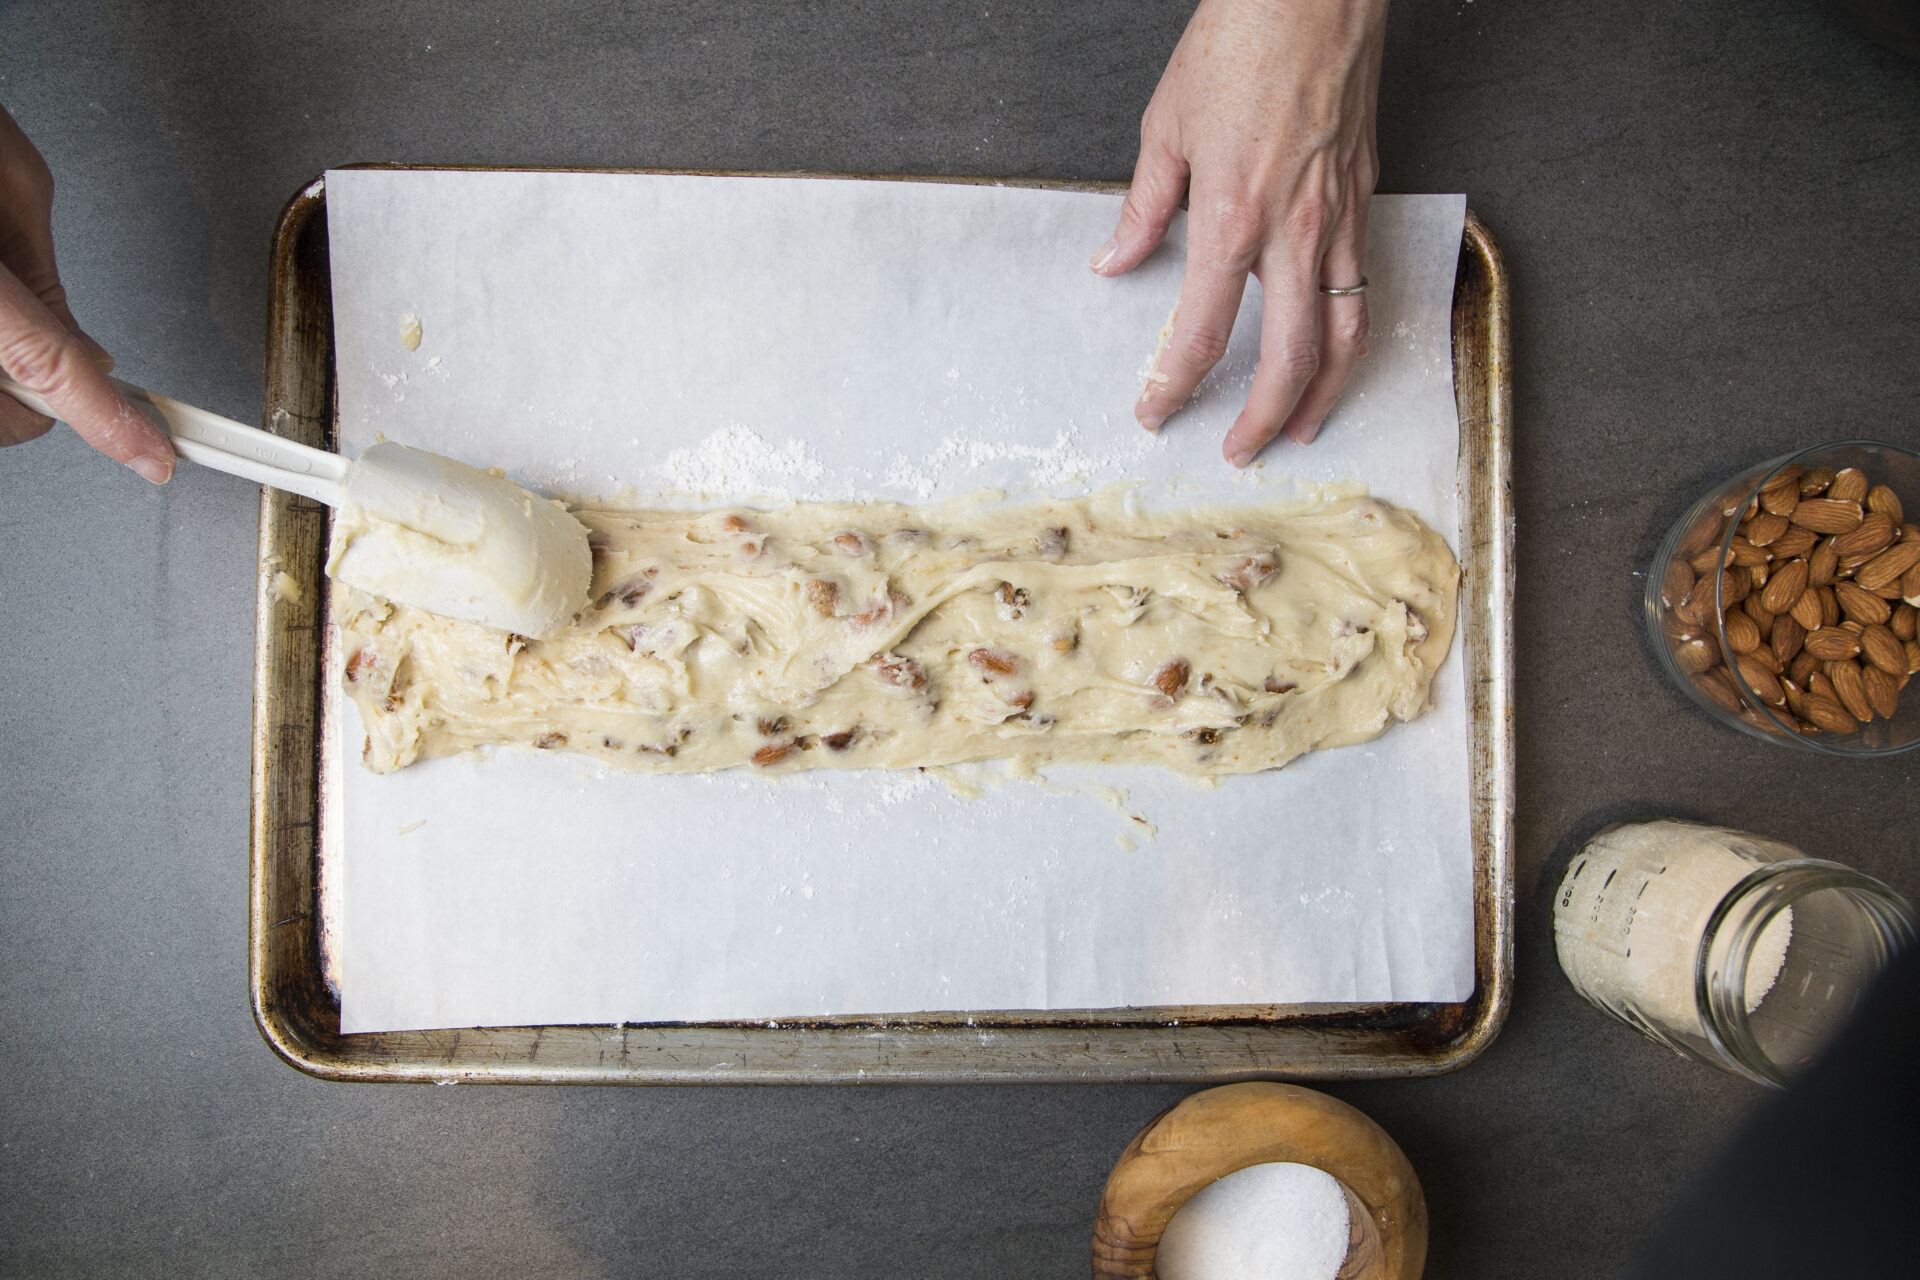 How to make biscotti step 4: Shape dough into a log